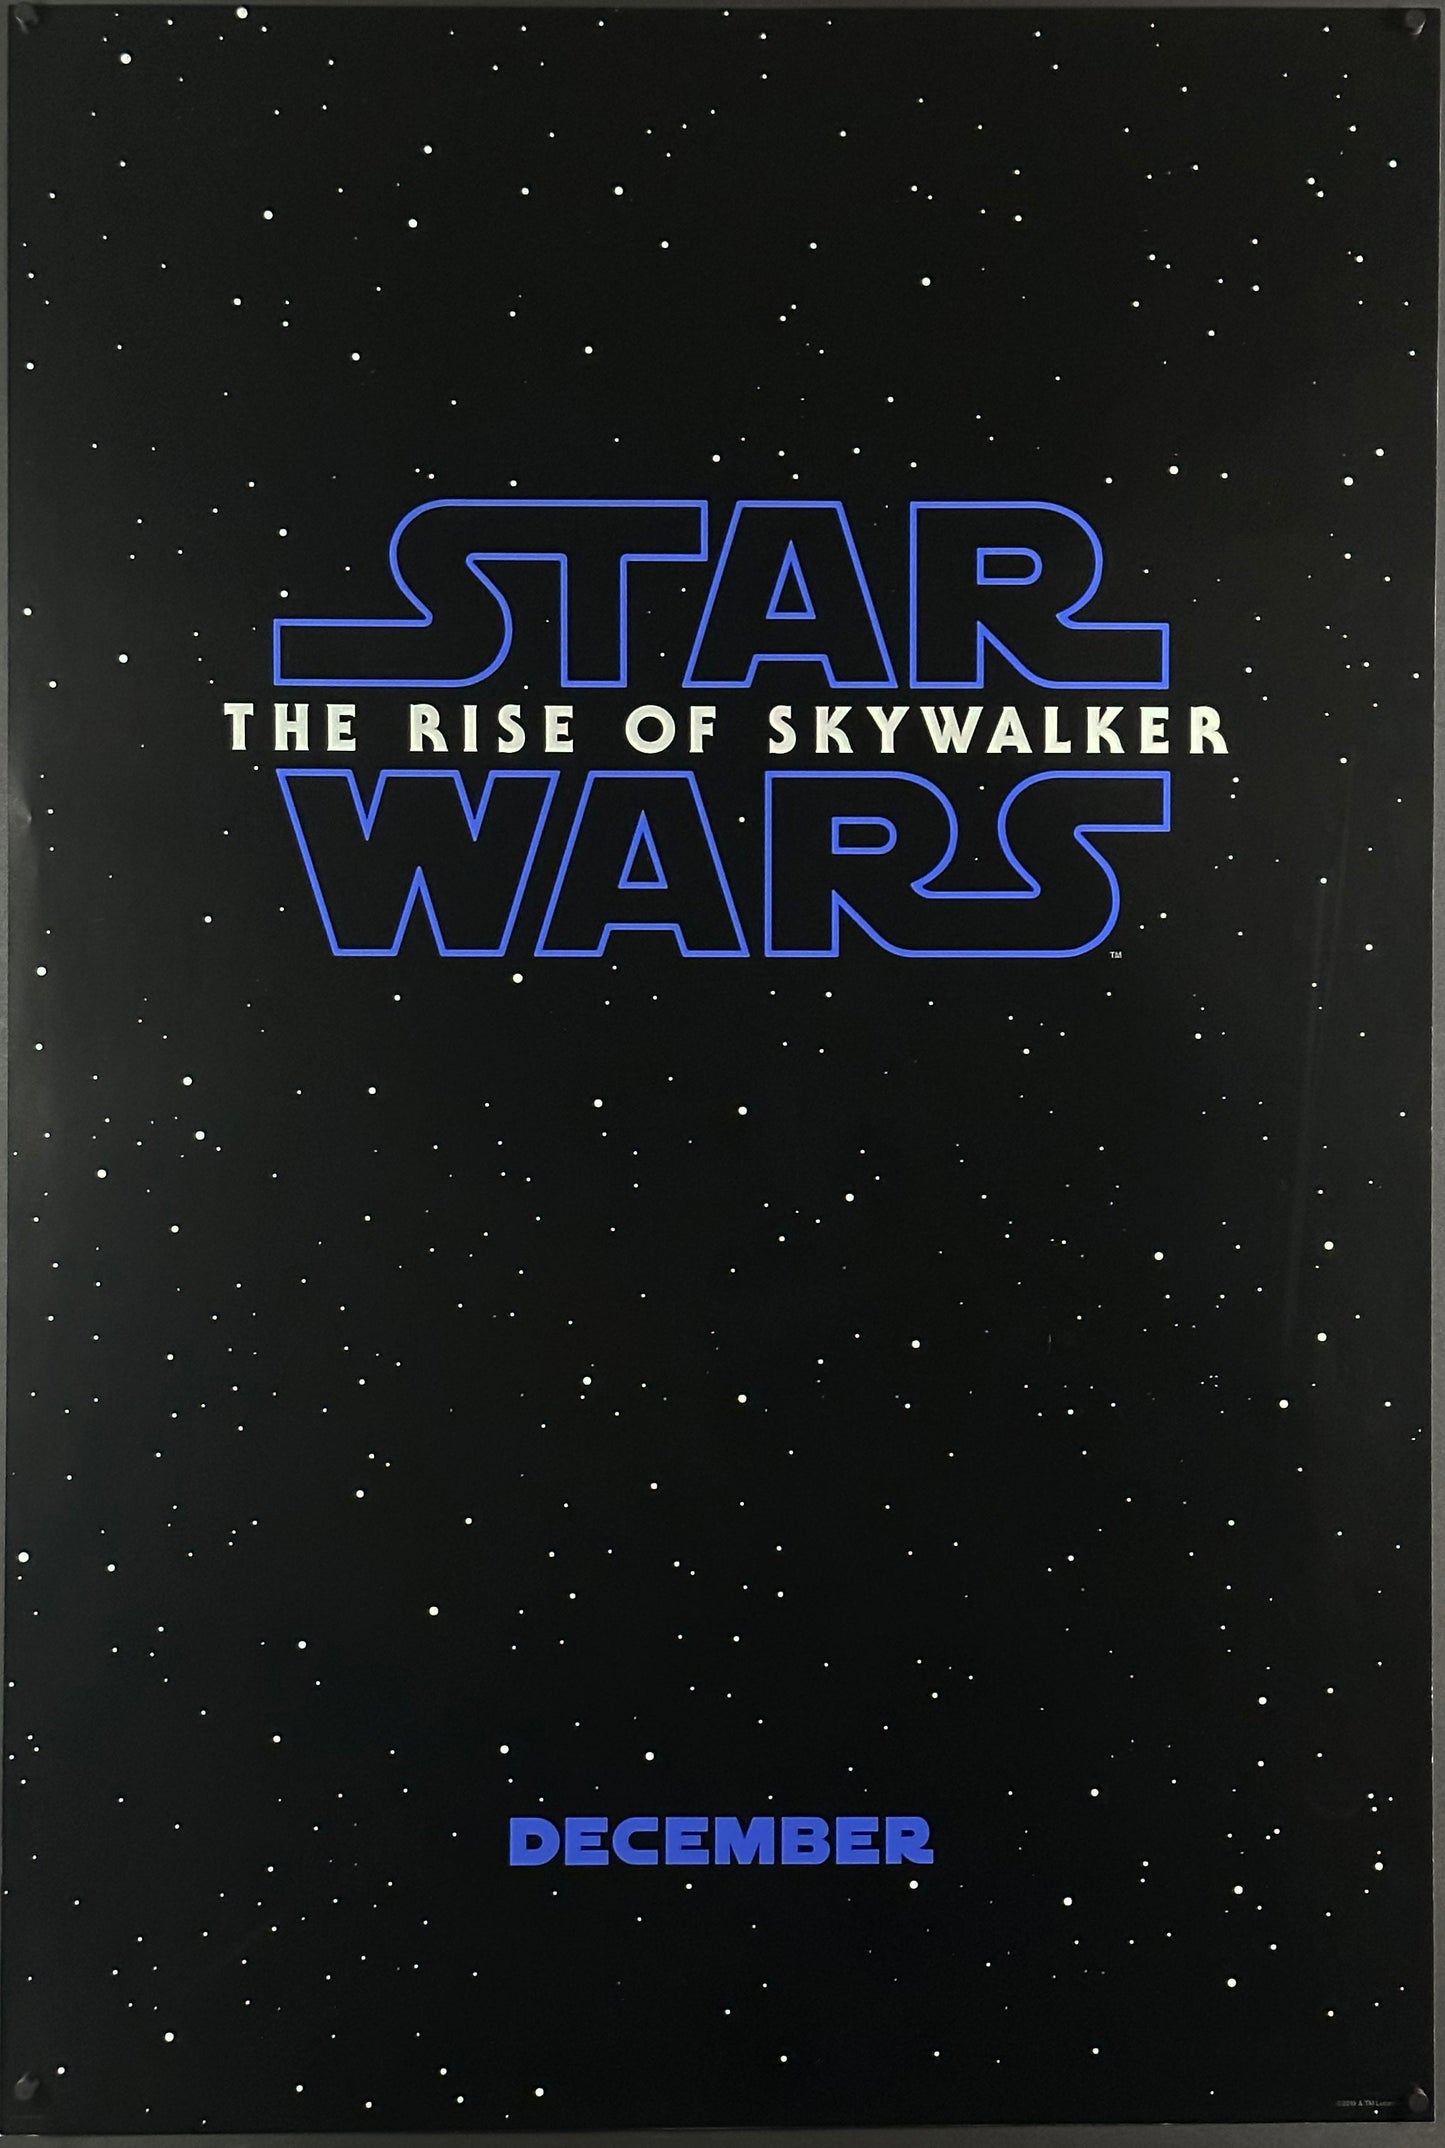 Star Wars: Episode IX - The Rise of Skywalker Vintage US One Sheet Teaser Style (2019) - ORIGINAL RELEASE - posterpalace.com